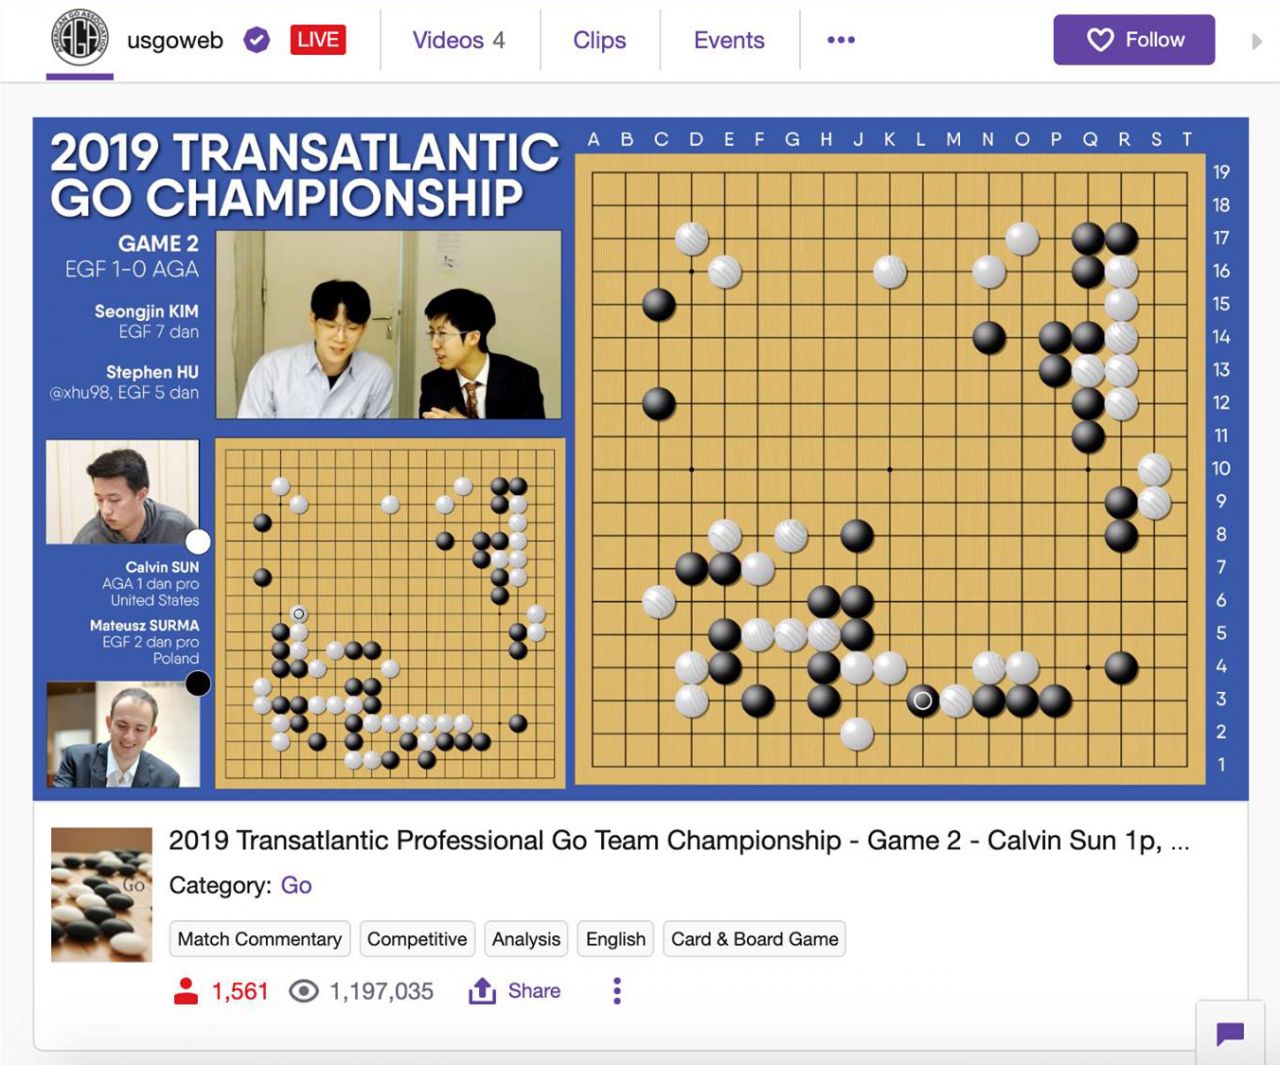 Seongjin Kim 7d and Stephen Hu 5d discuss the second round of the Transatlantic Professional Go Team Championship